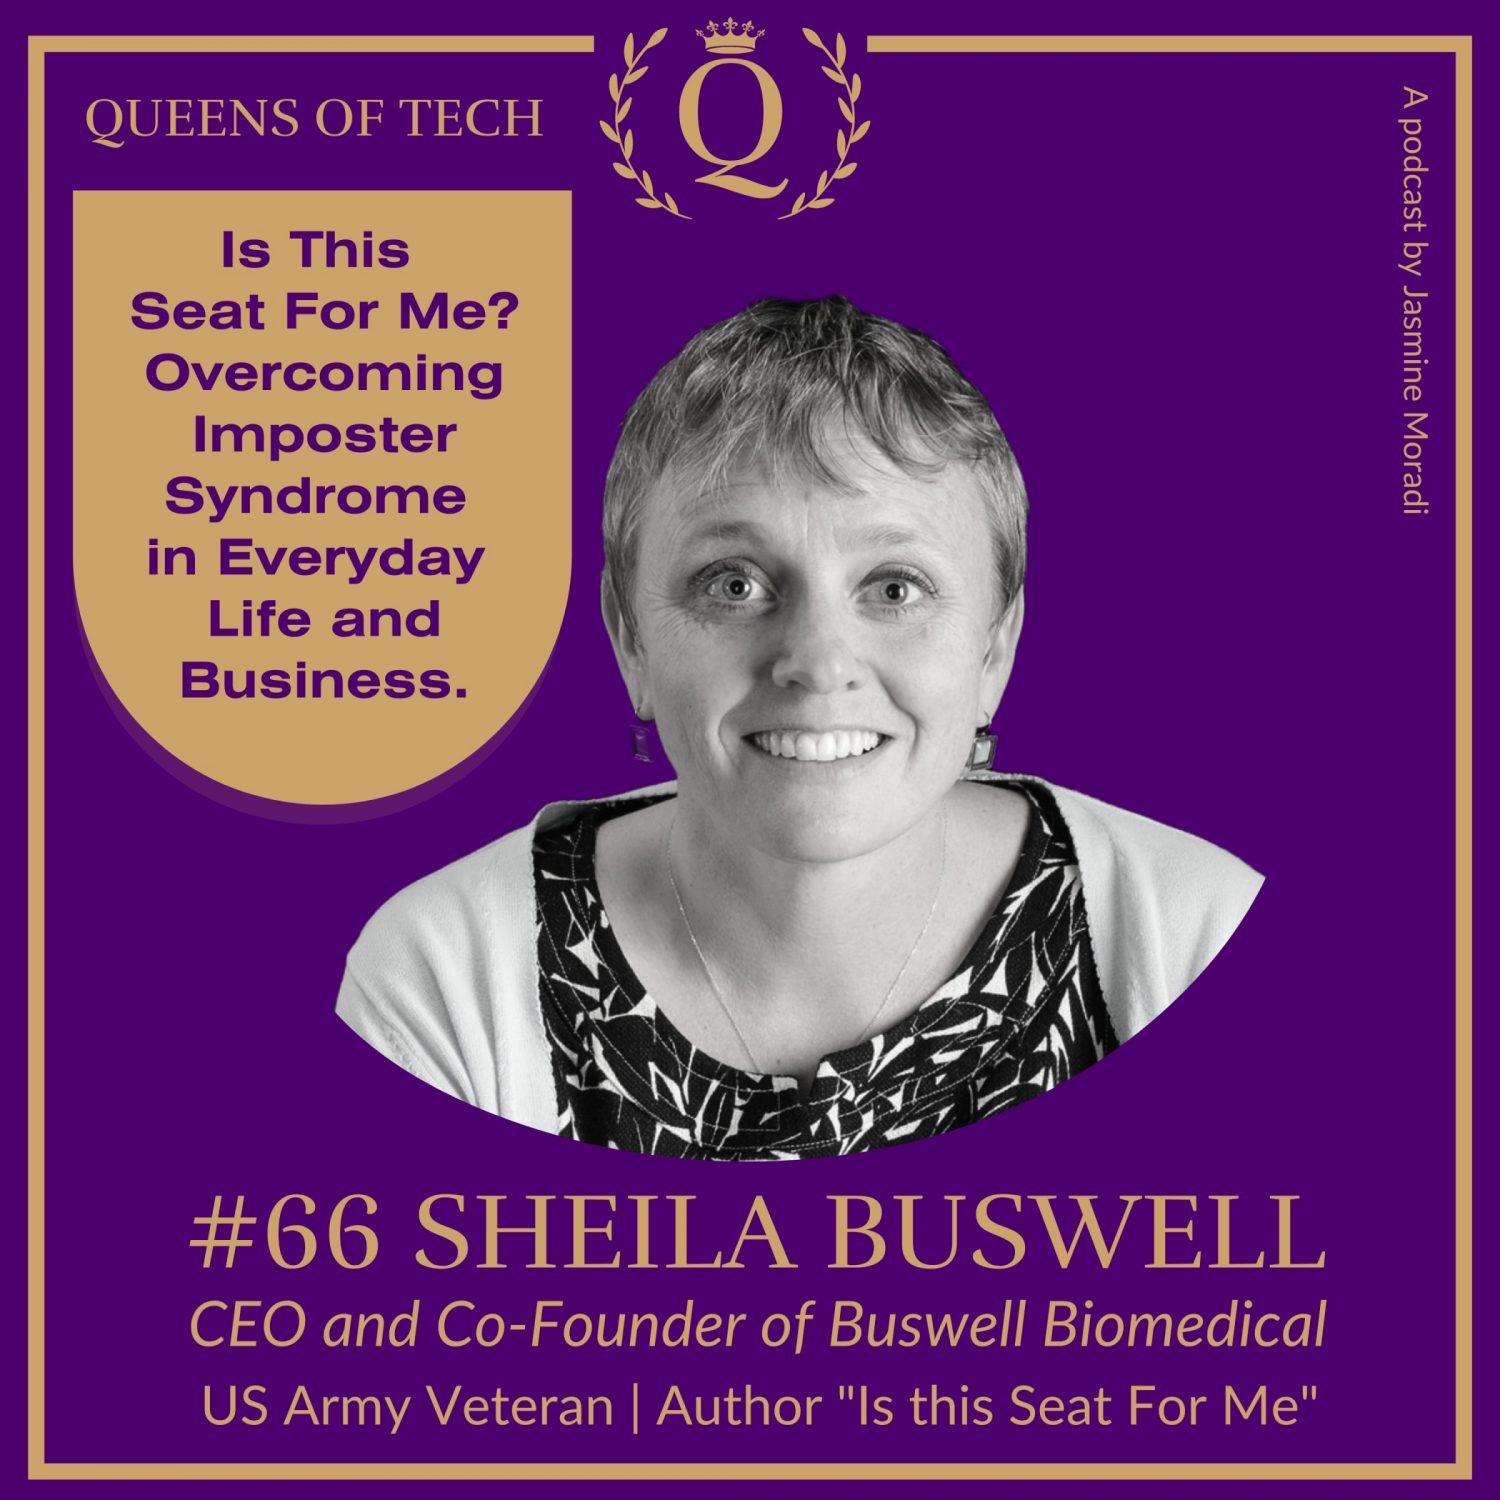 Queens of Tech Sheila Buswell